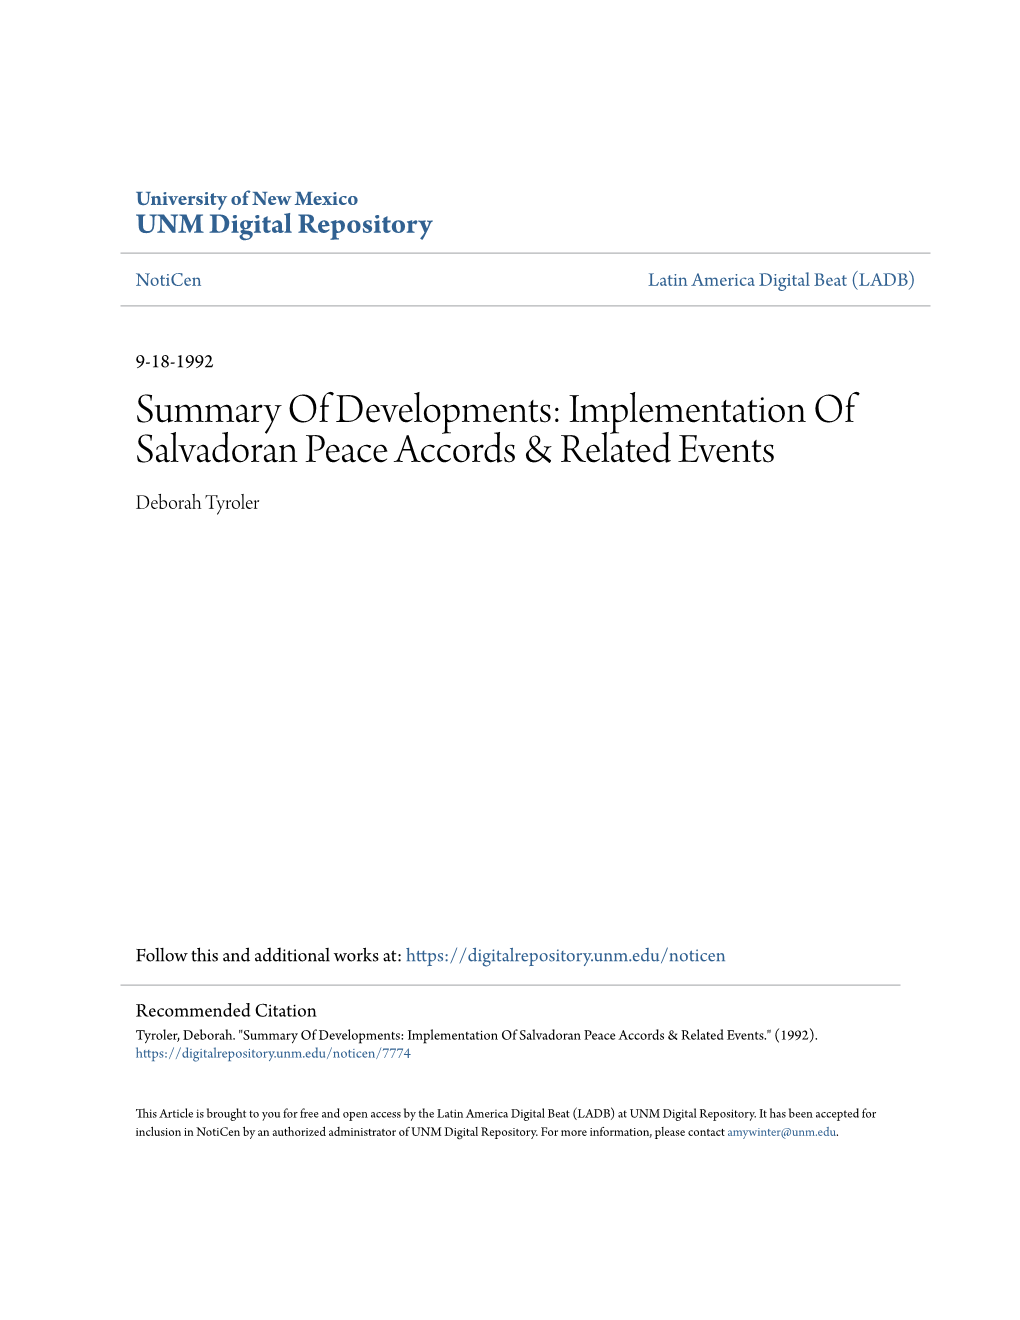 Summary of Developments: Implementation of Salvadoran Peace Accords & Related Events Deborah Tyroler